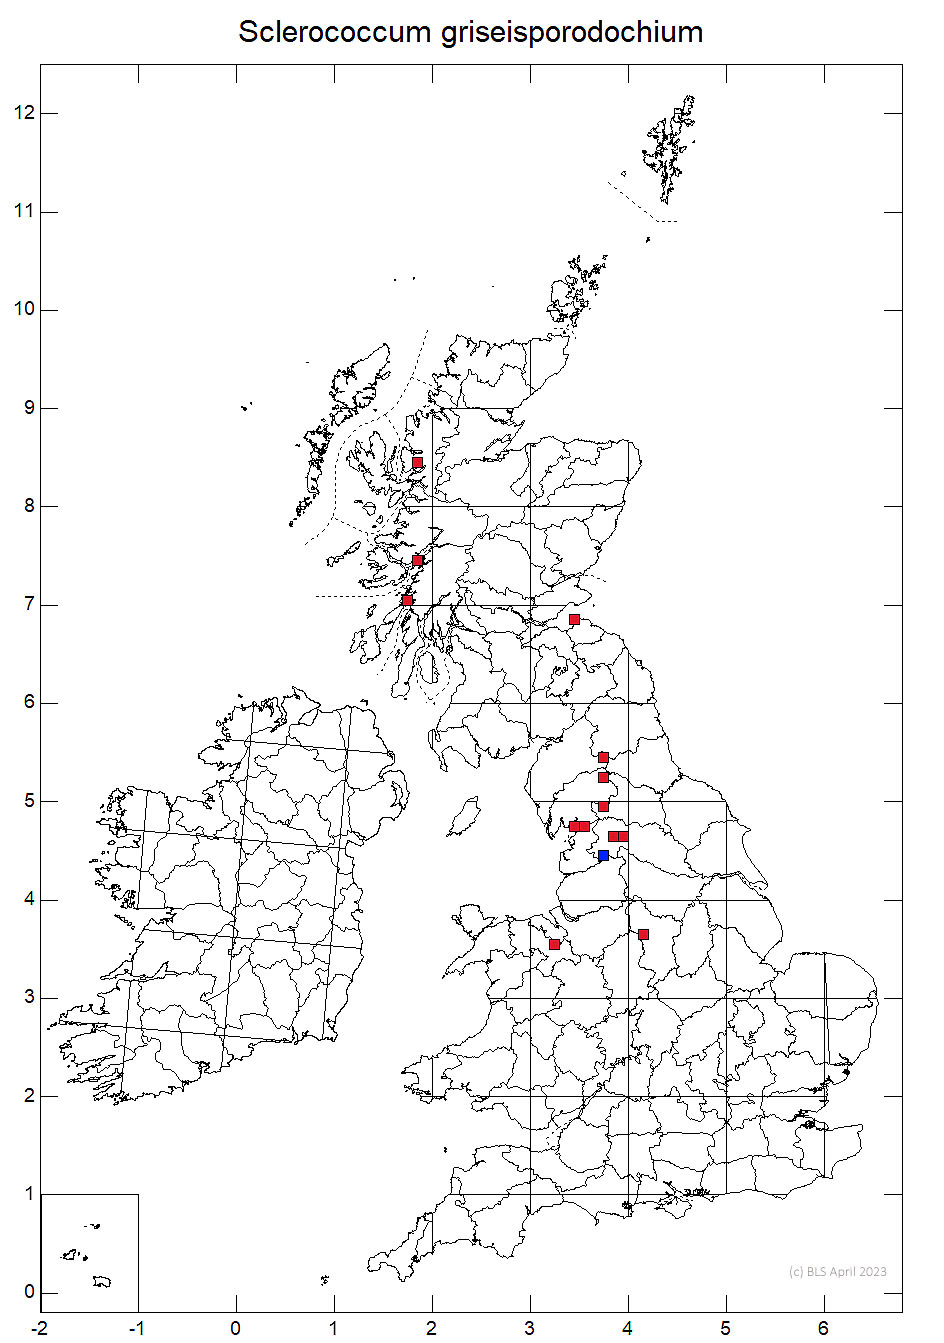 Sclerococcum griseisporodochium 10km sq distribution map